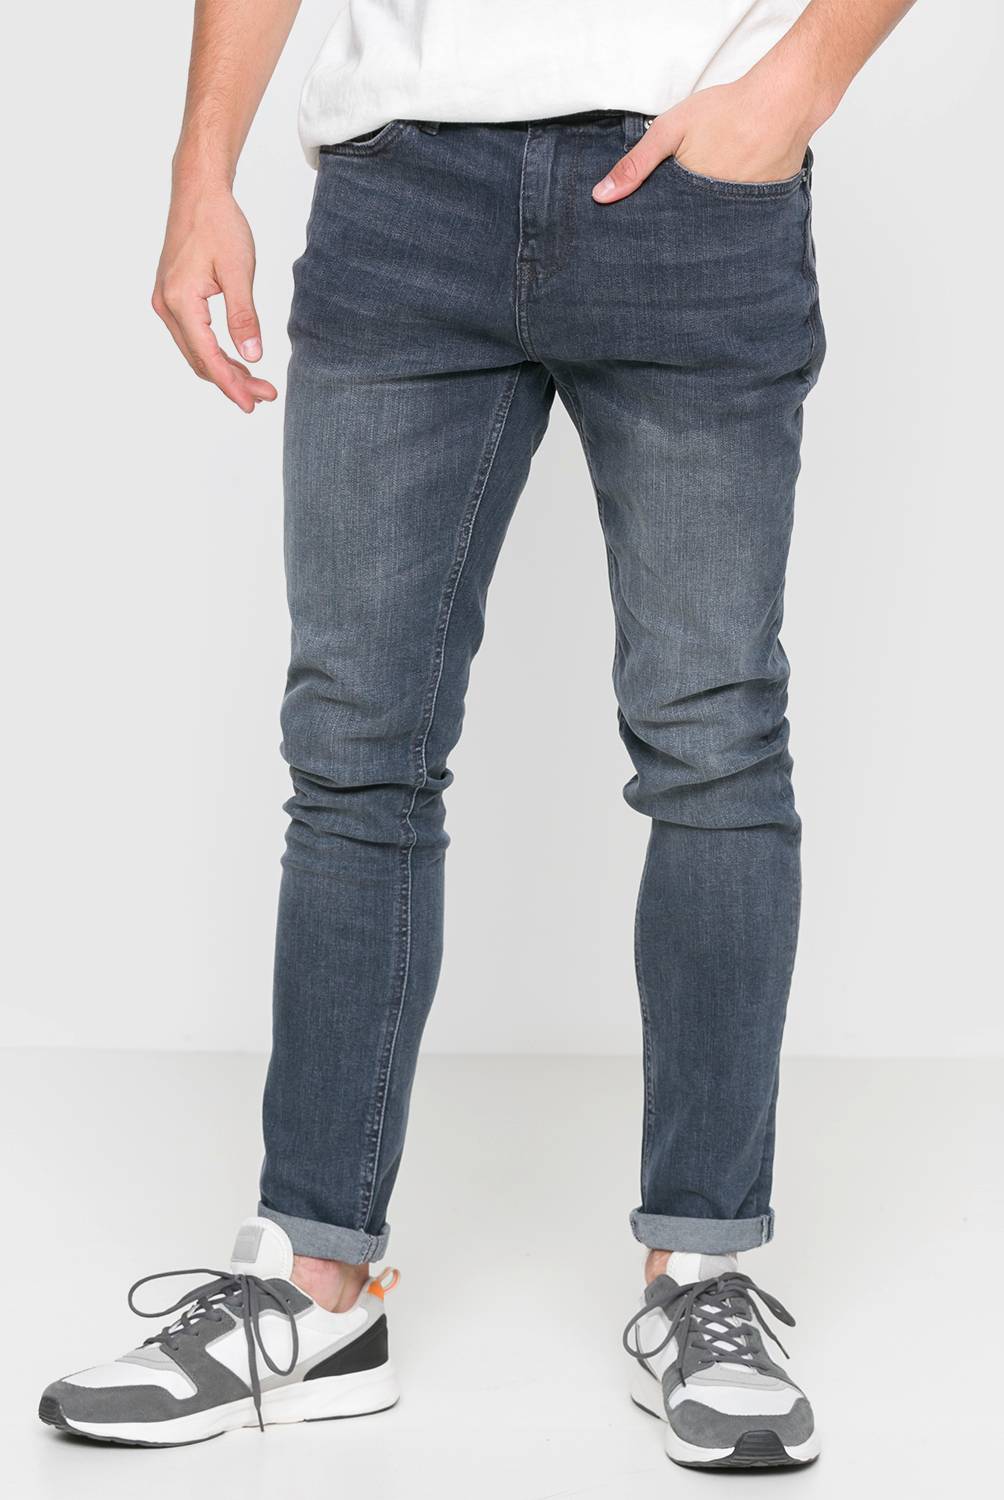 AMERICANINO - Jeans Super Skinny